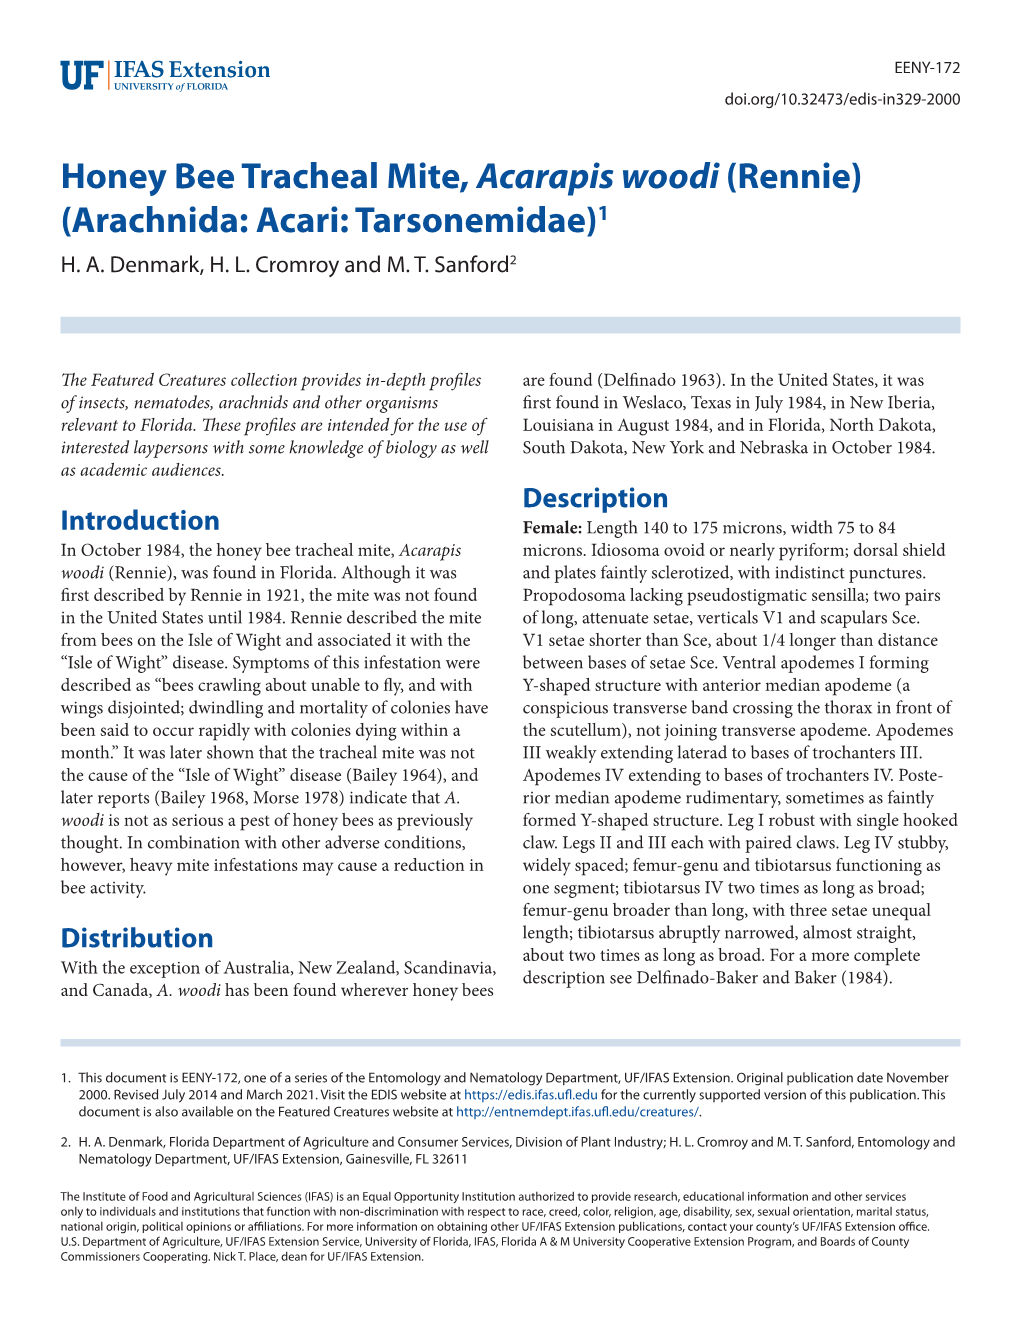 Honey Bee Tracheal Mite, Acarapis Woodi (Rennie) (Arachnida: Acari: Tarsonemidae)1 H